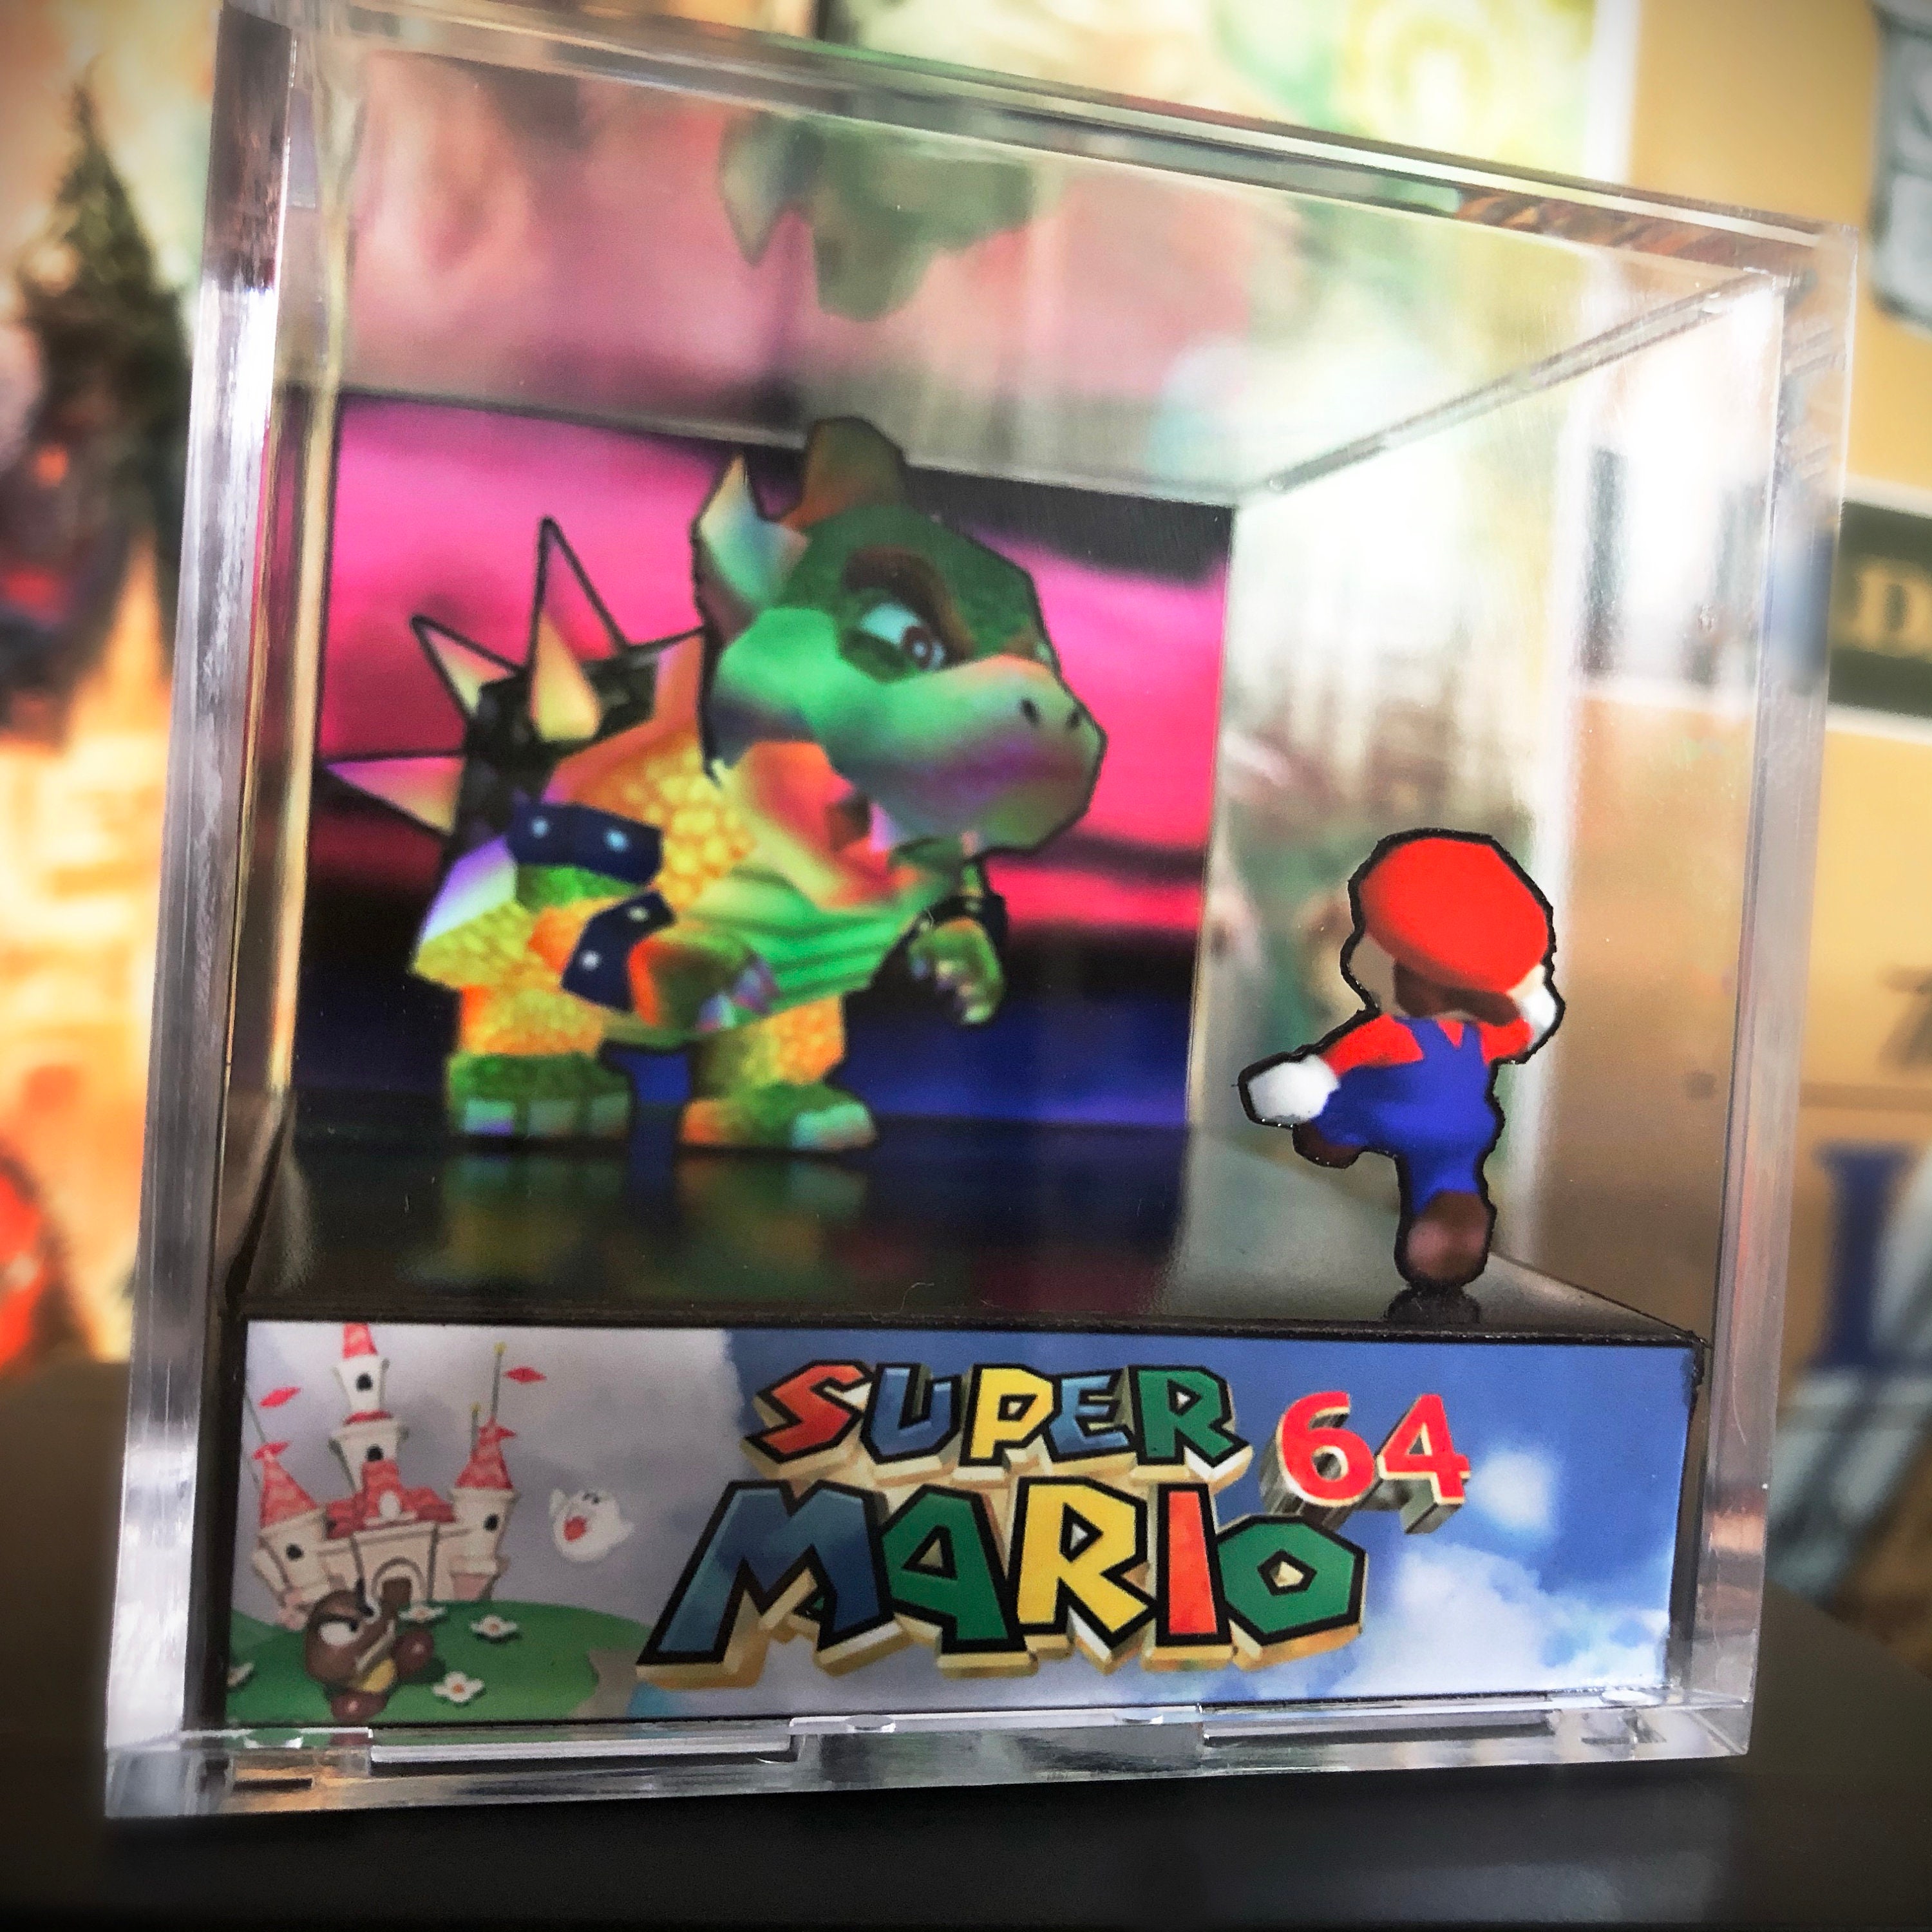 Pack de 3 figurines Nintendo Super Mario Bowser contre Mario